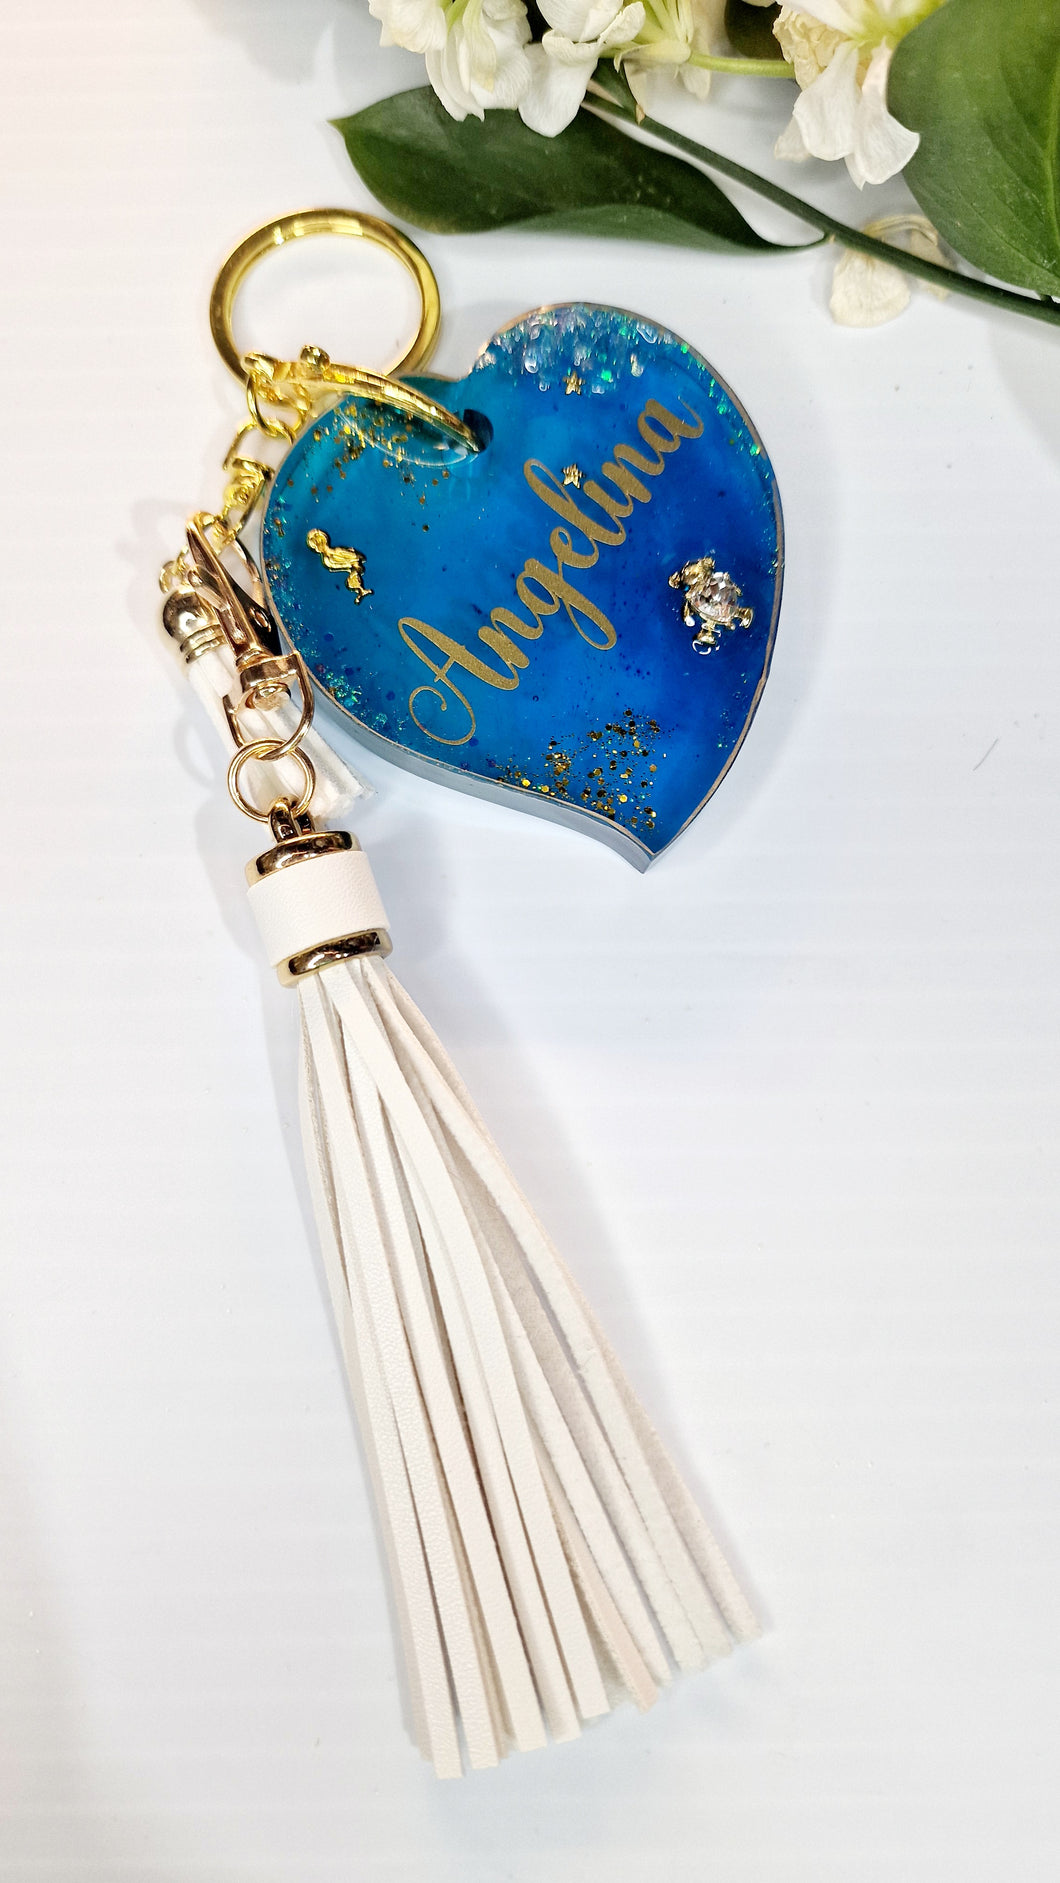 Personalised Keyring Bags & Fridge Magnets - Tailor-Made Treasures